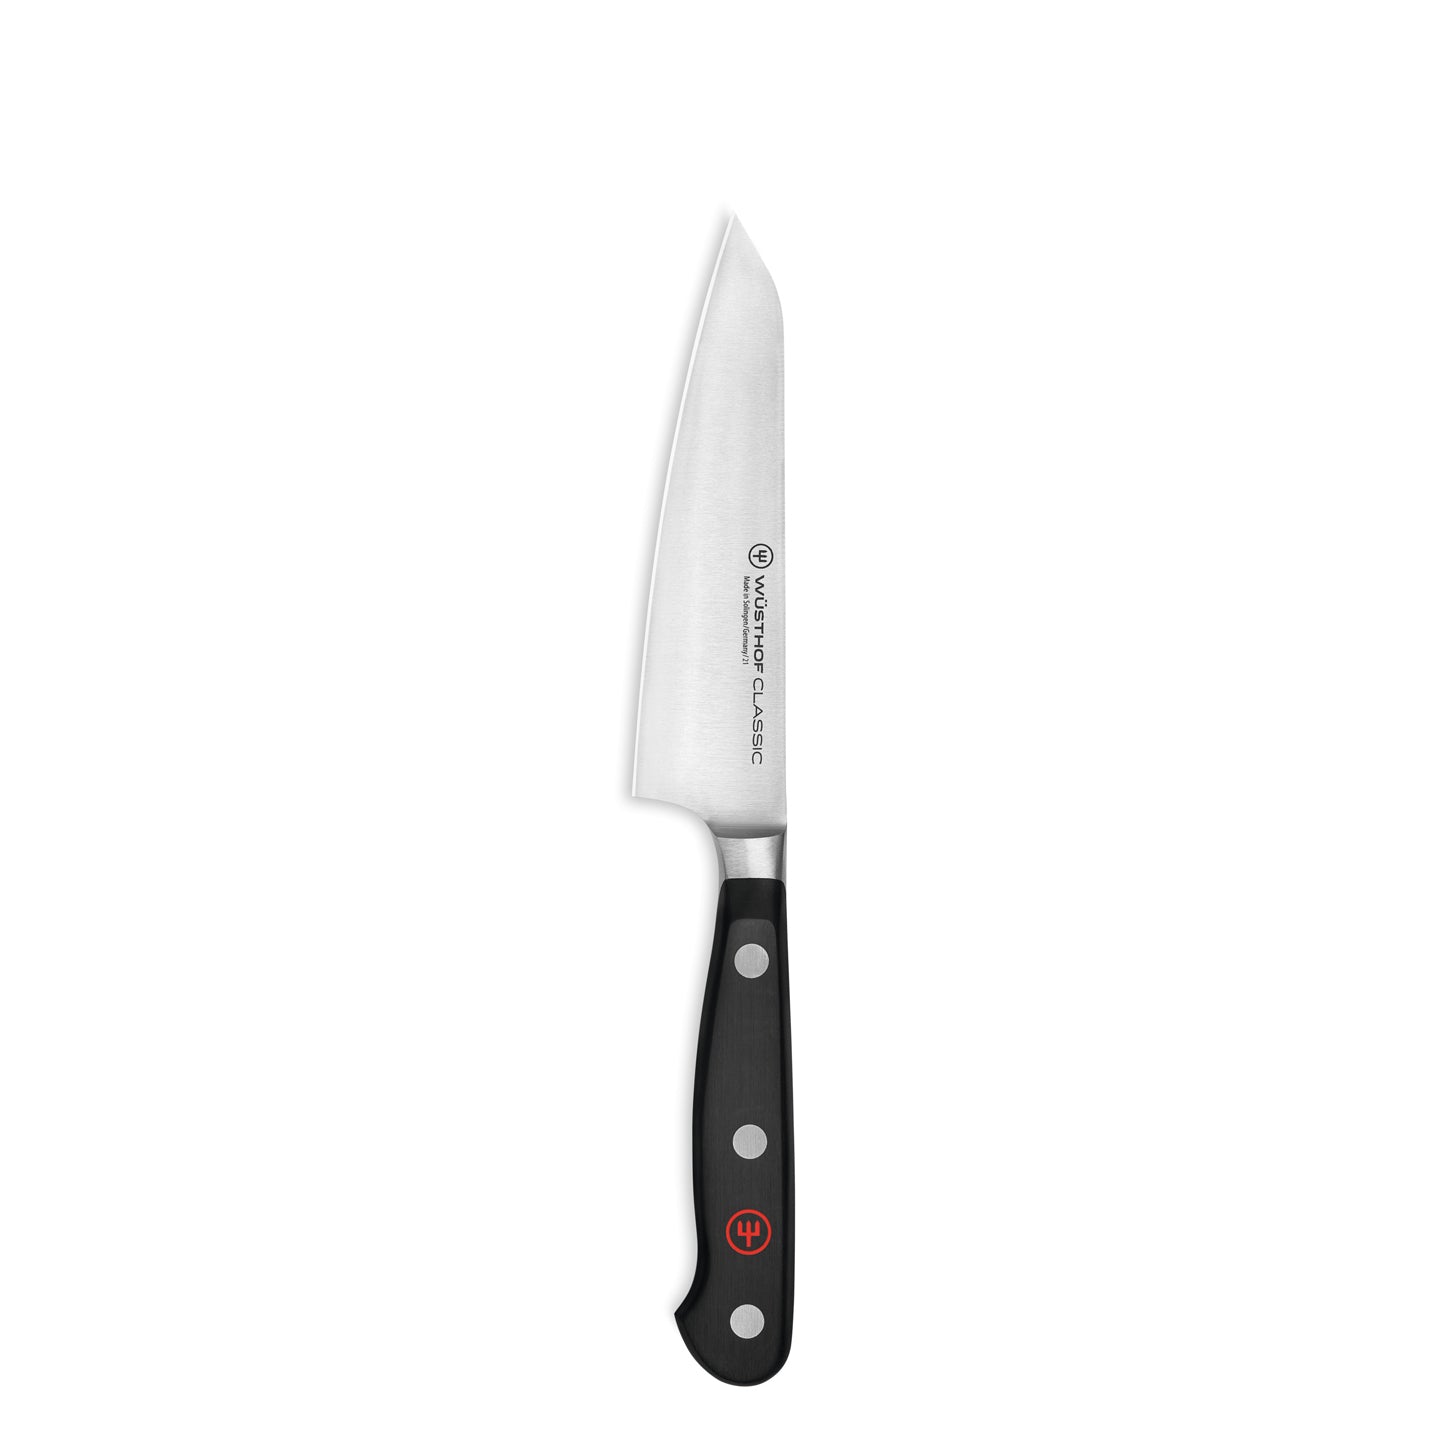 Wusthof Classic Asian Utility Knife